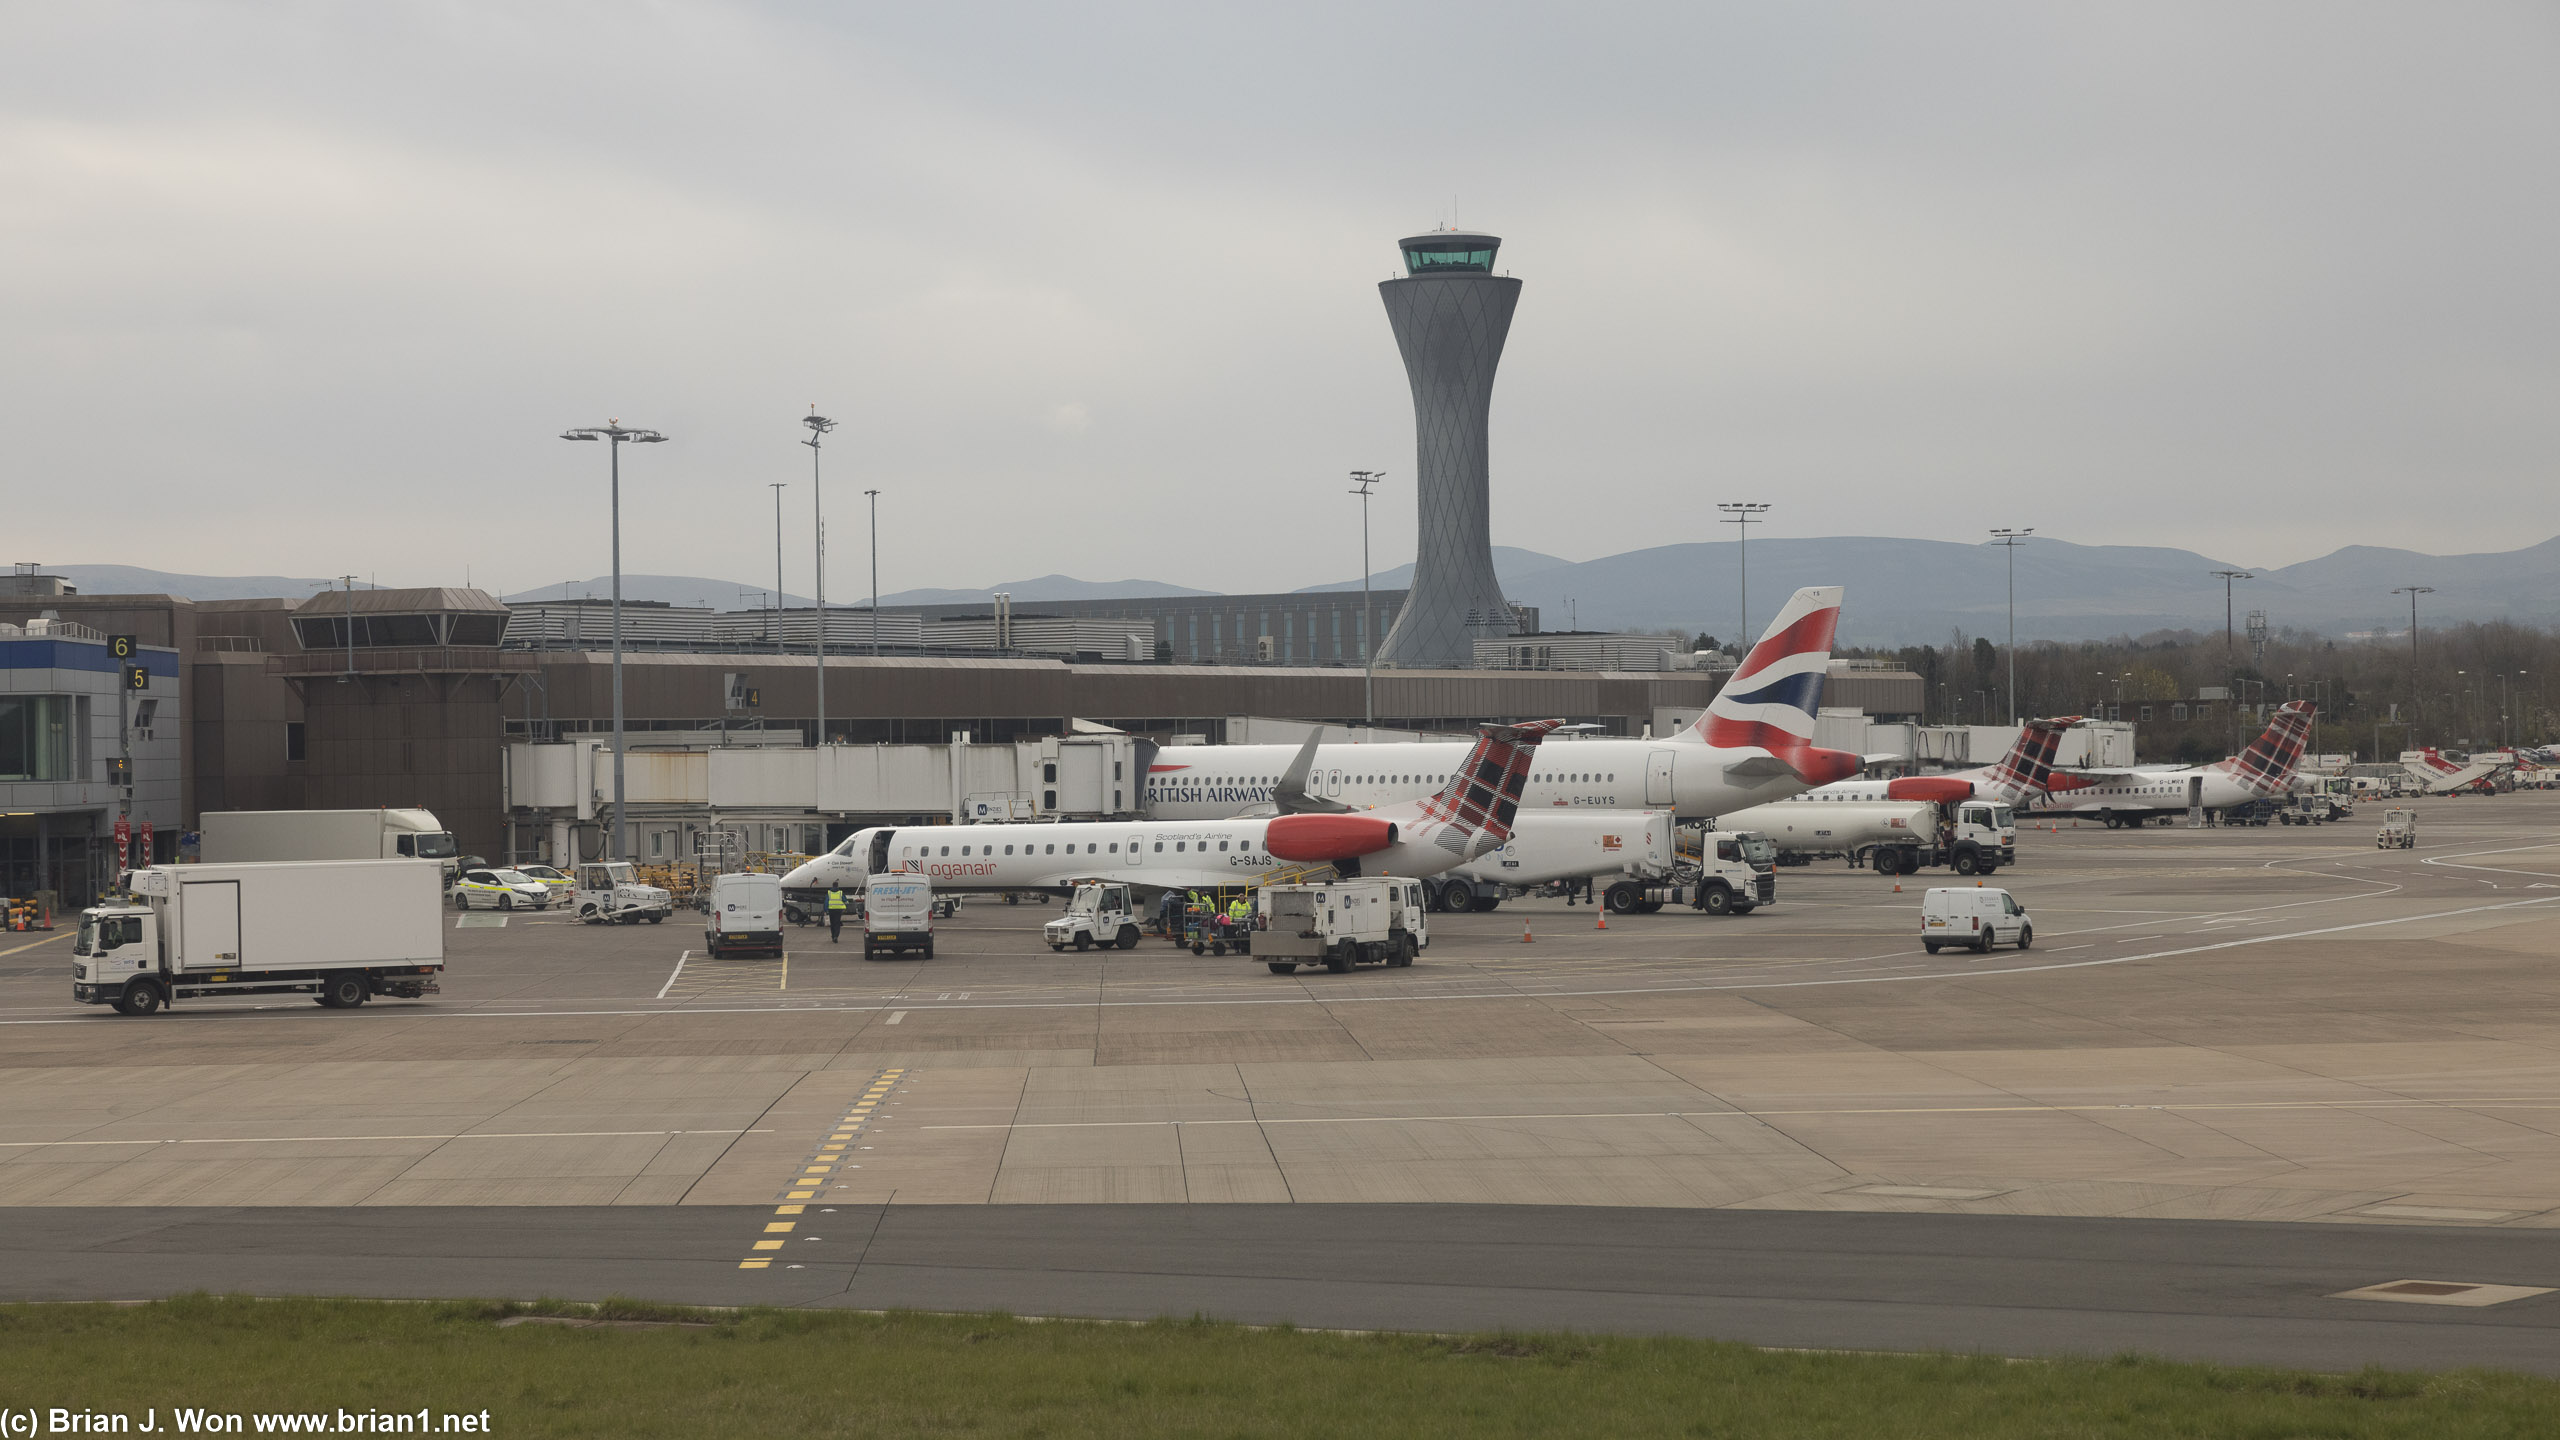 British Airways and Loganair at Edinburgh Airport.